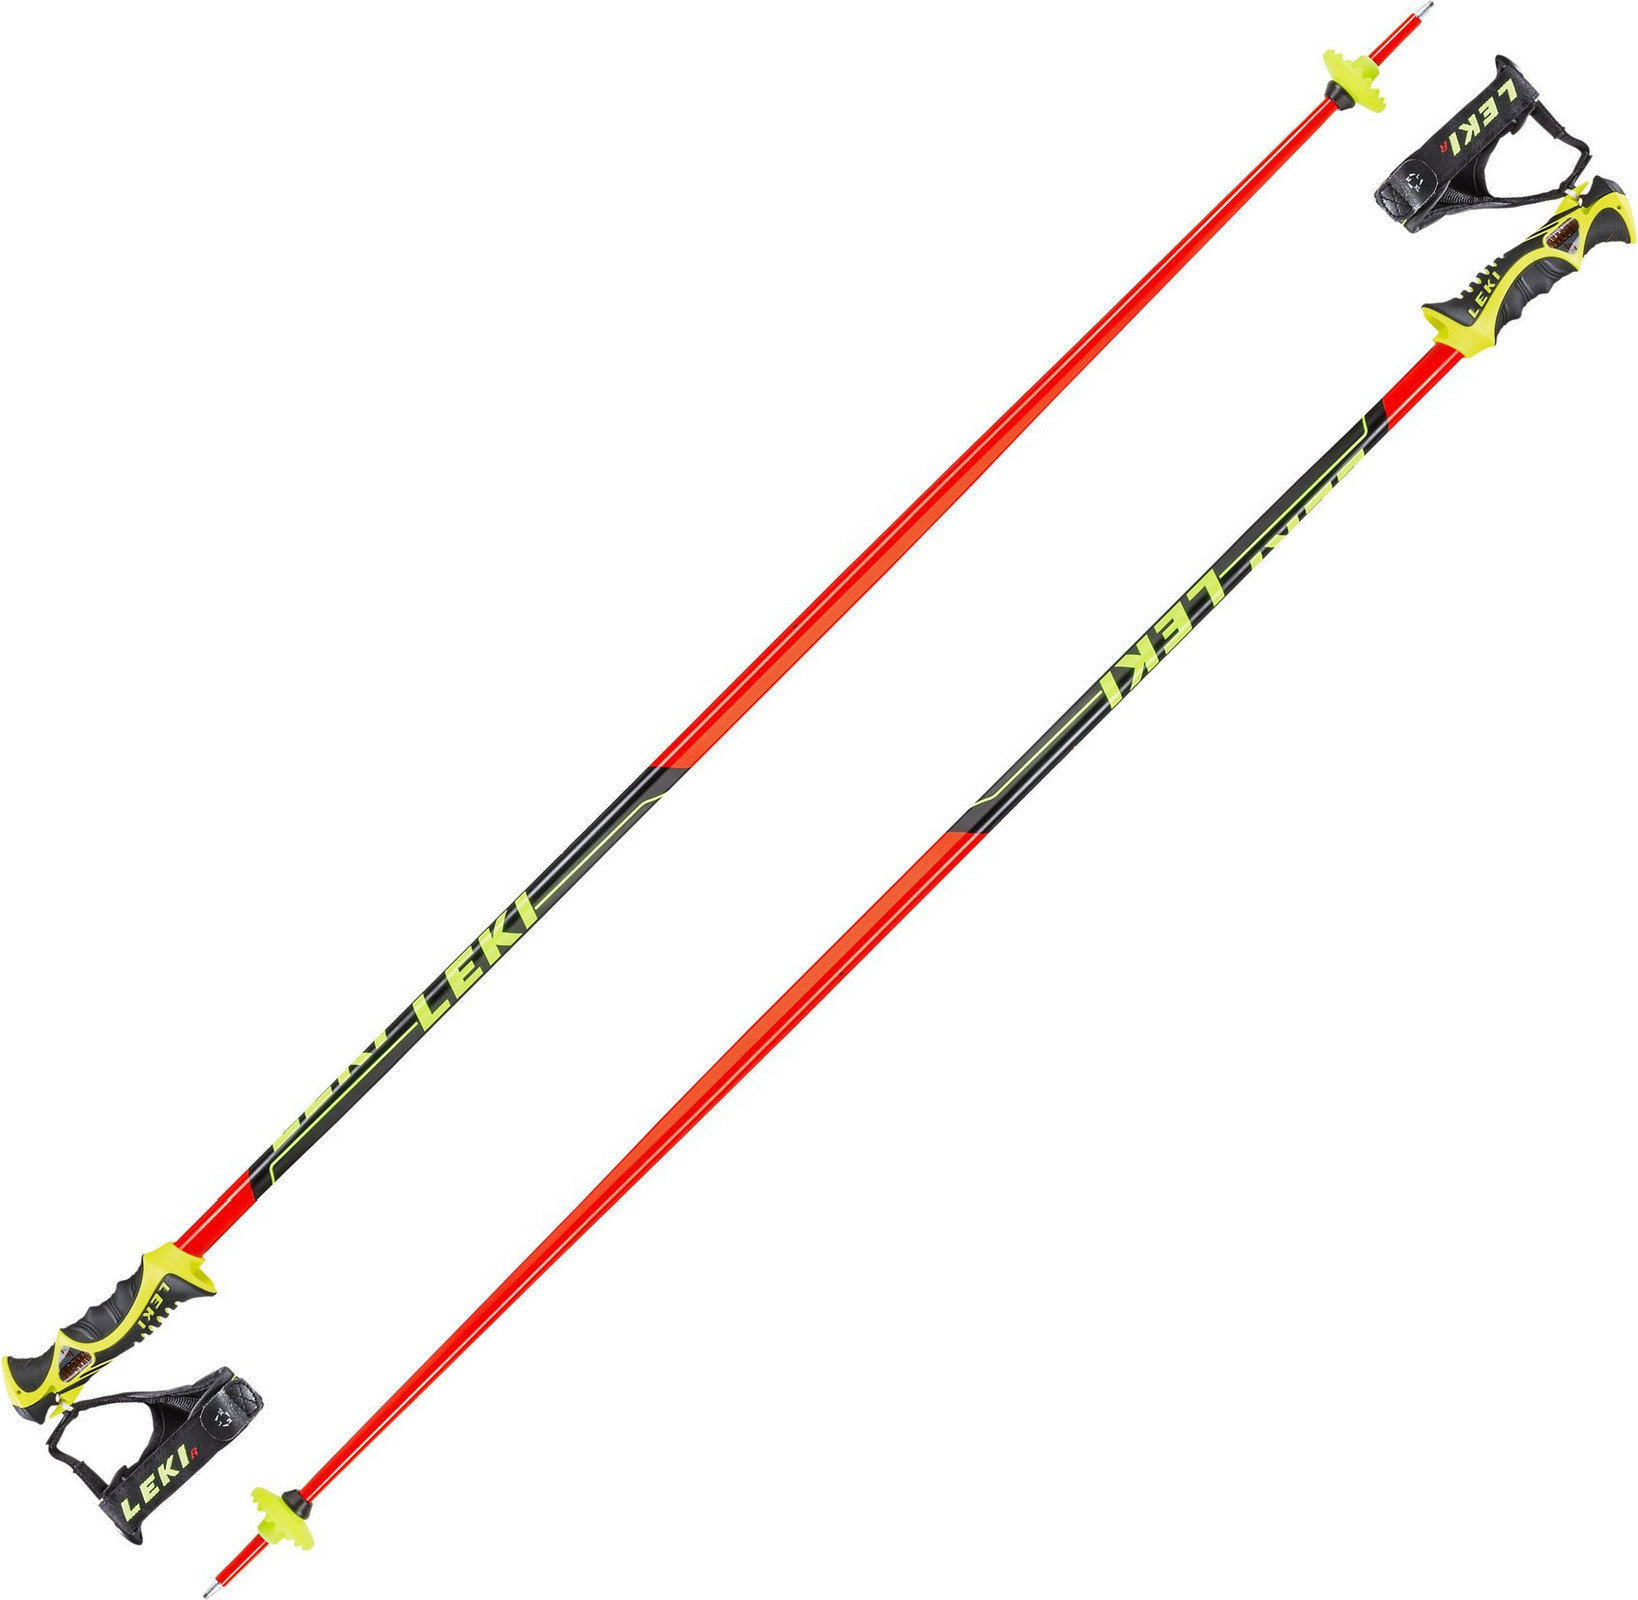 Ski-stokken Leki Worldcup Racing SL Neonred/Black/White/Yellow 125 cm Ski-stokken